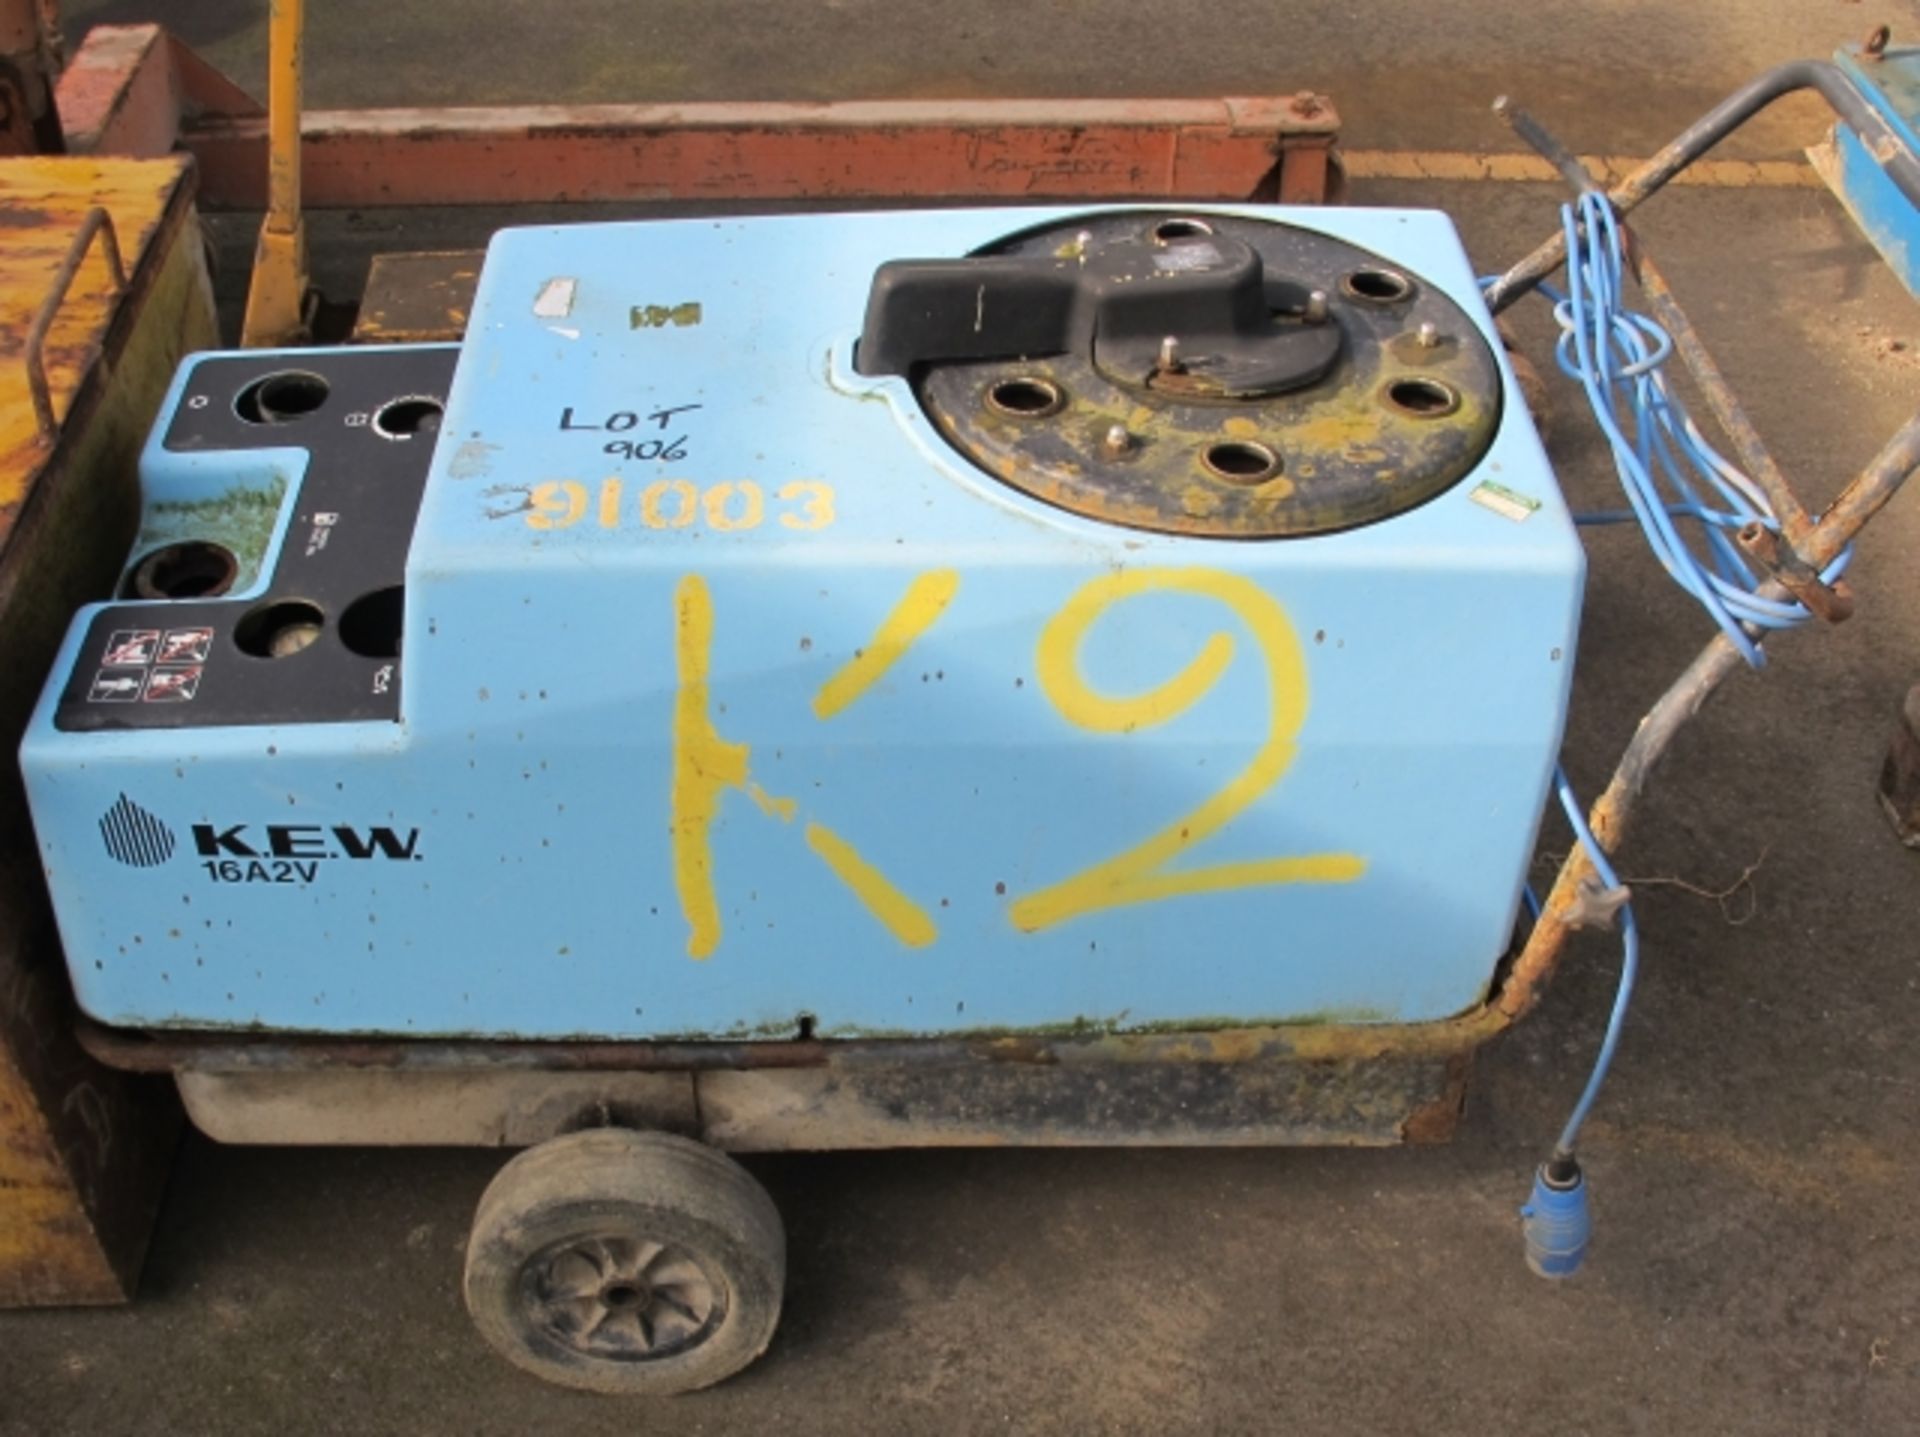 * KEW 16A 2V Diesel Pressure Washer 240V, (spares/repair).